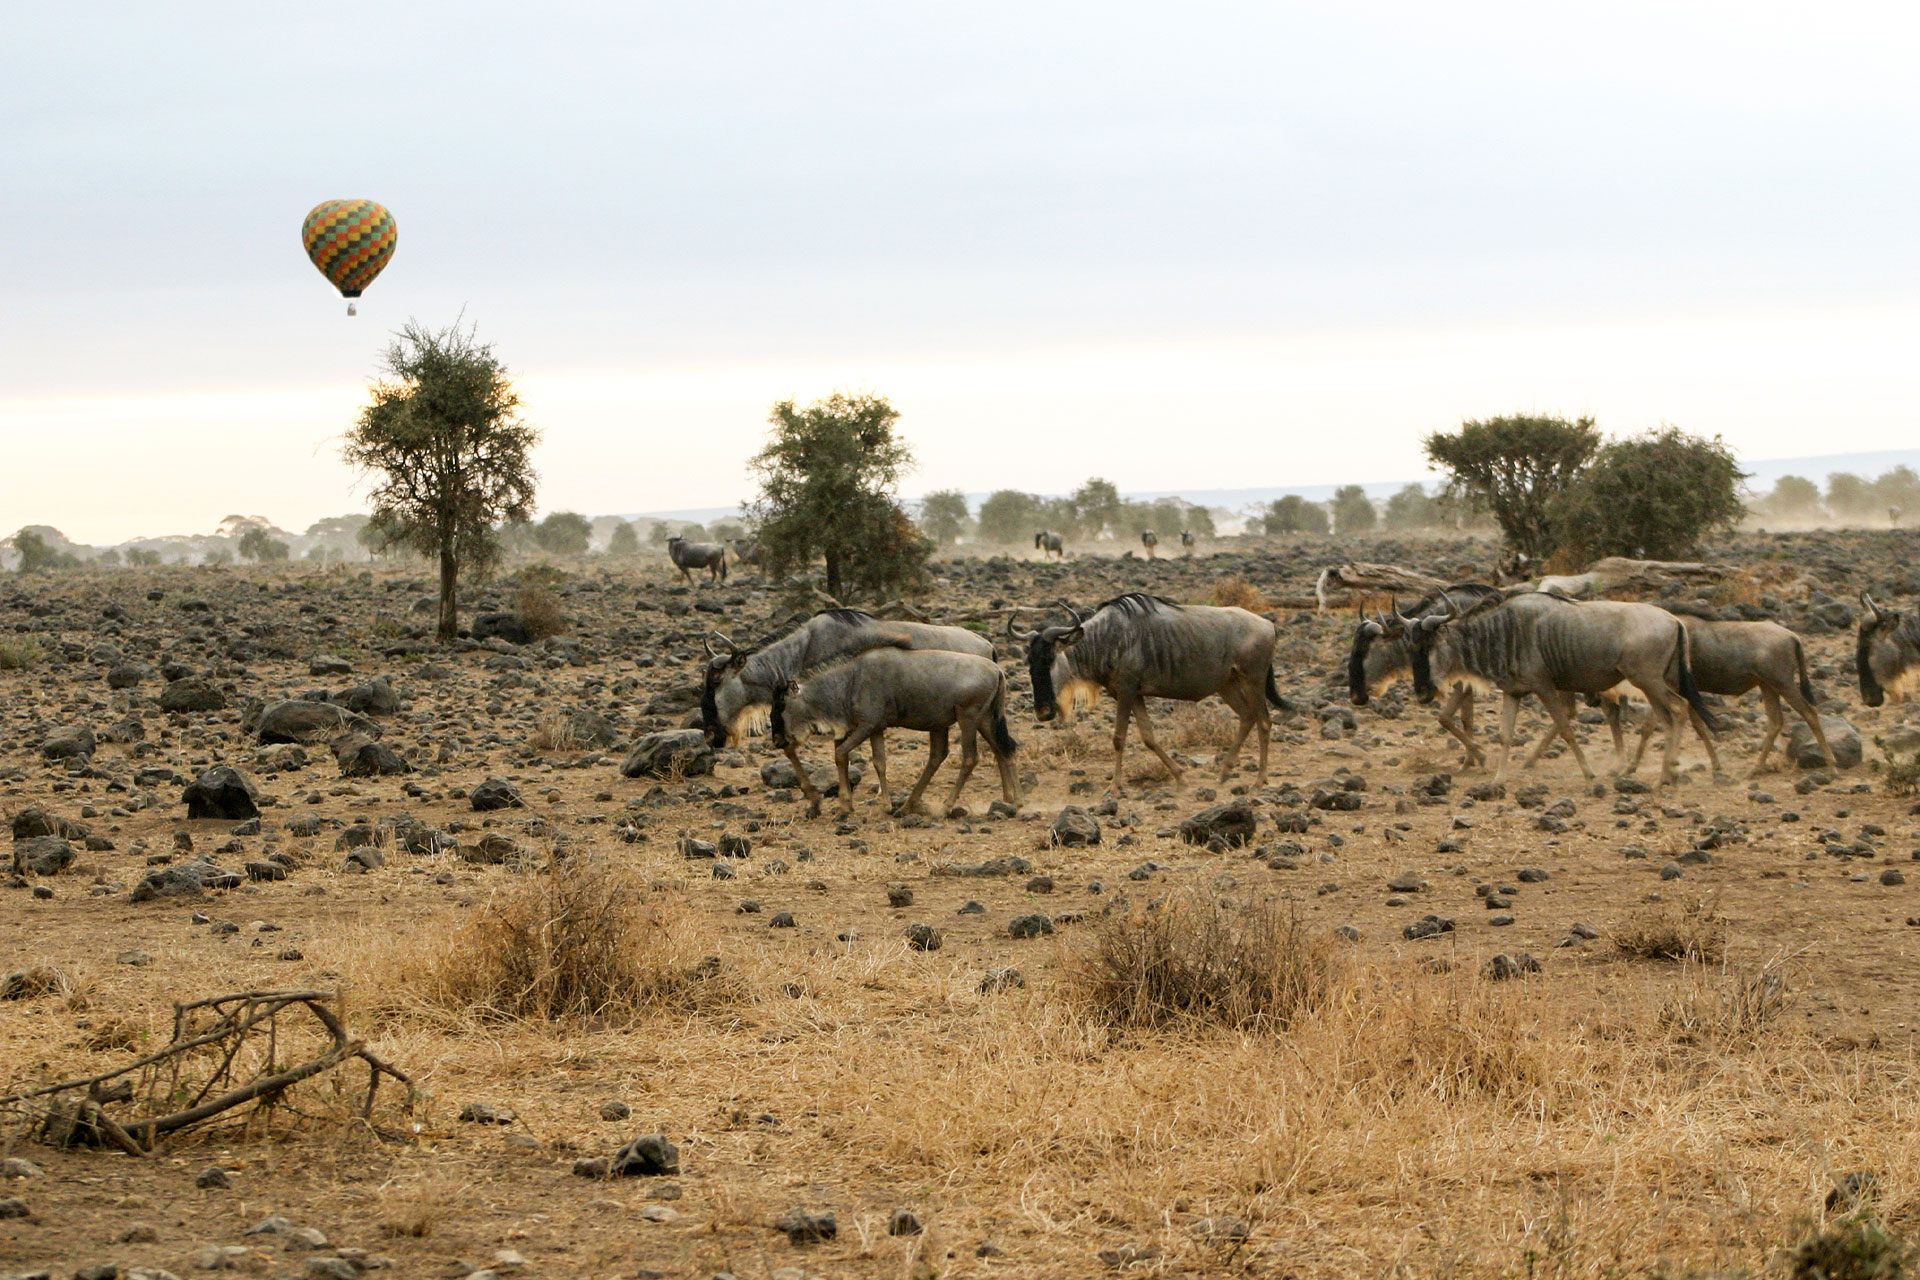 A hot air balloon safari in the Serengeti in East Africa